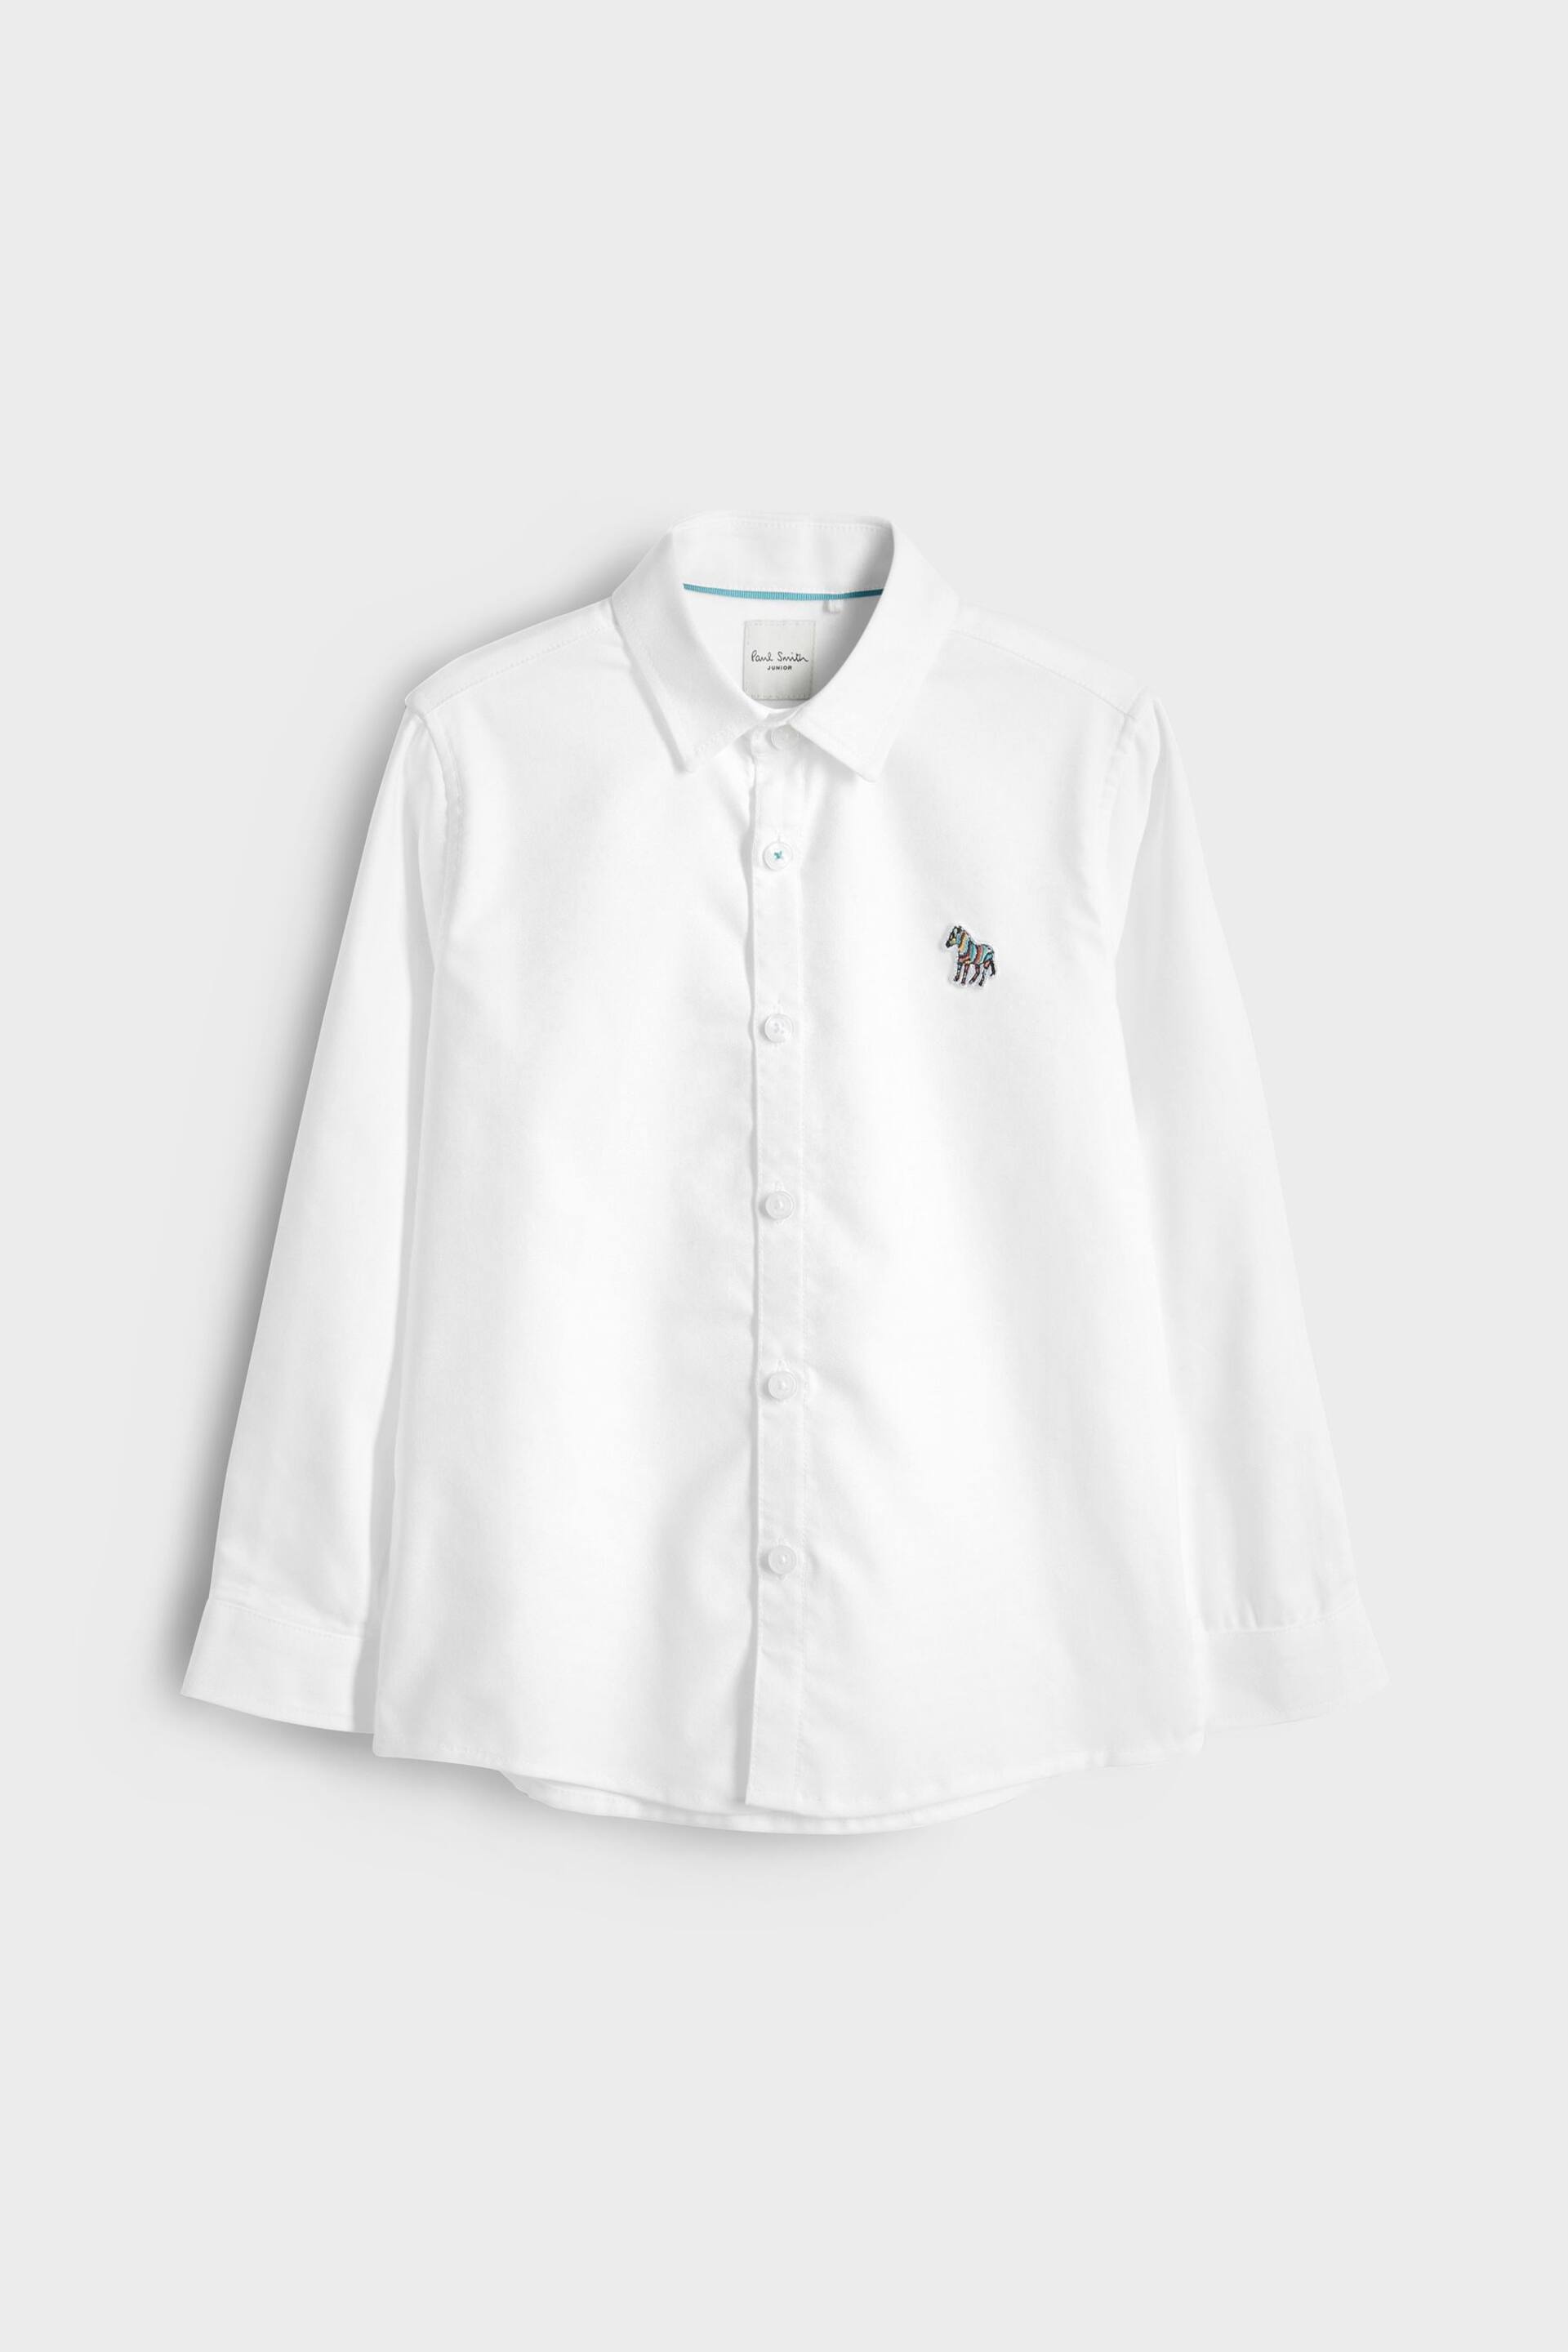 Paul Smith Junior Boys Oxford Shirt - Image 7 of 8